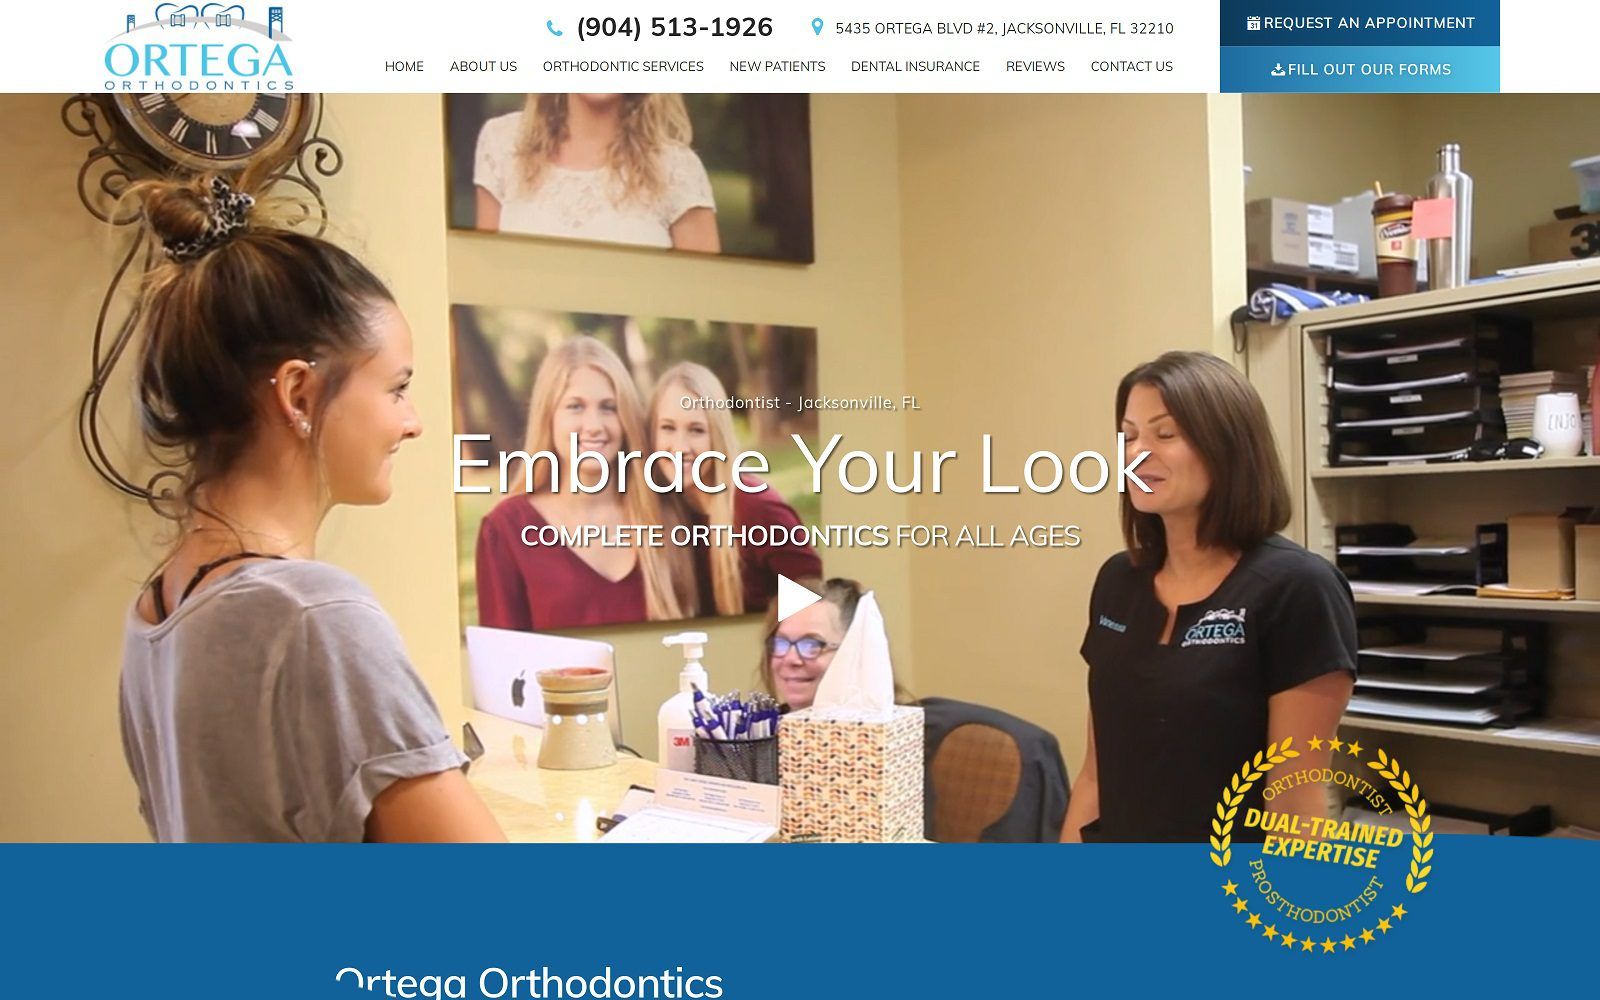 The screenshot of ortega orthodontics website